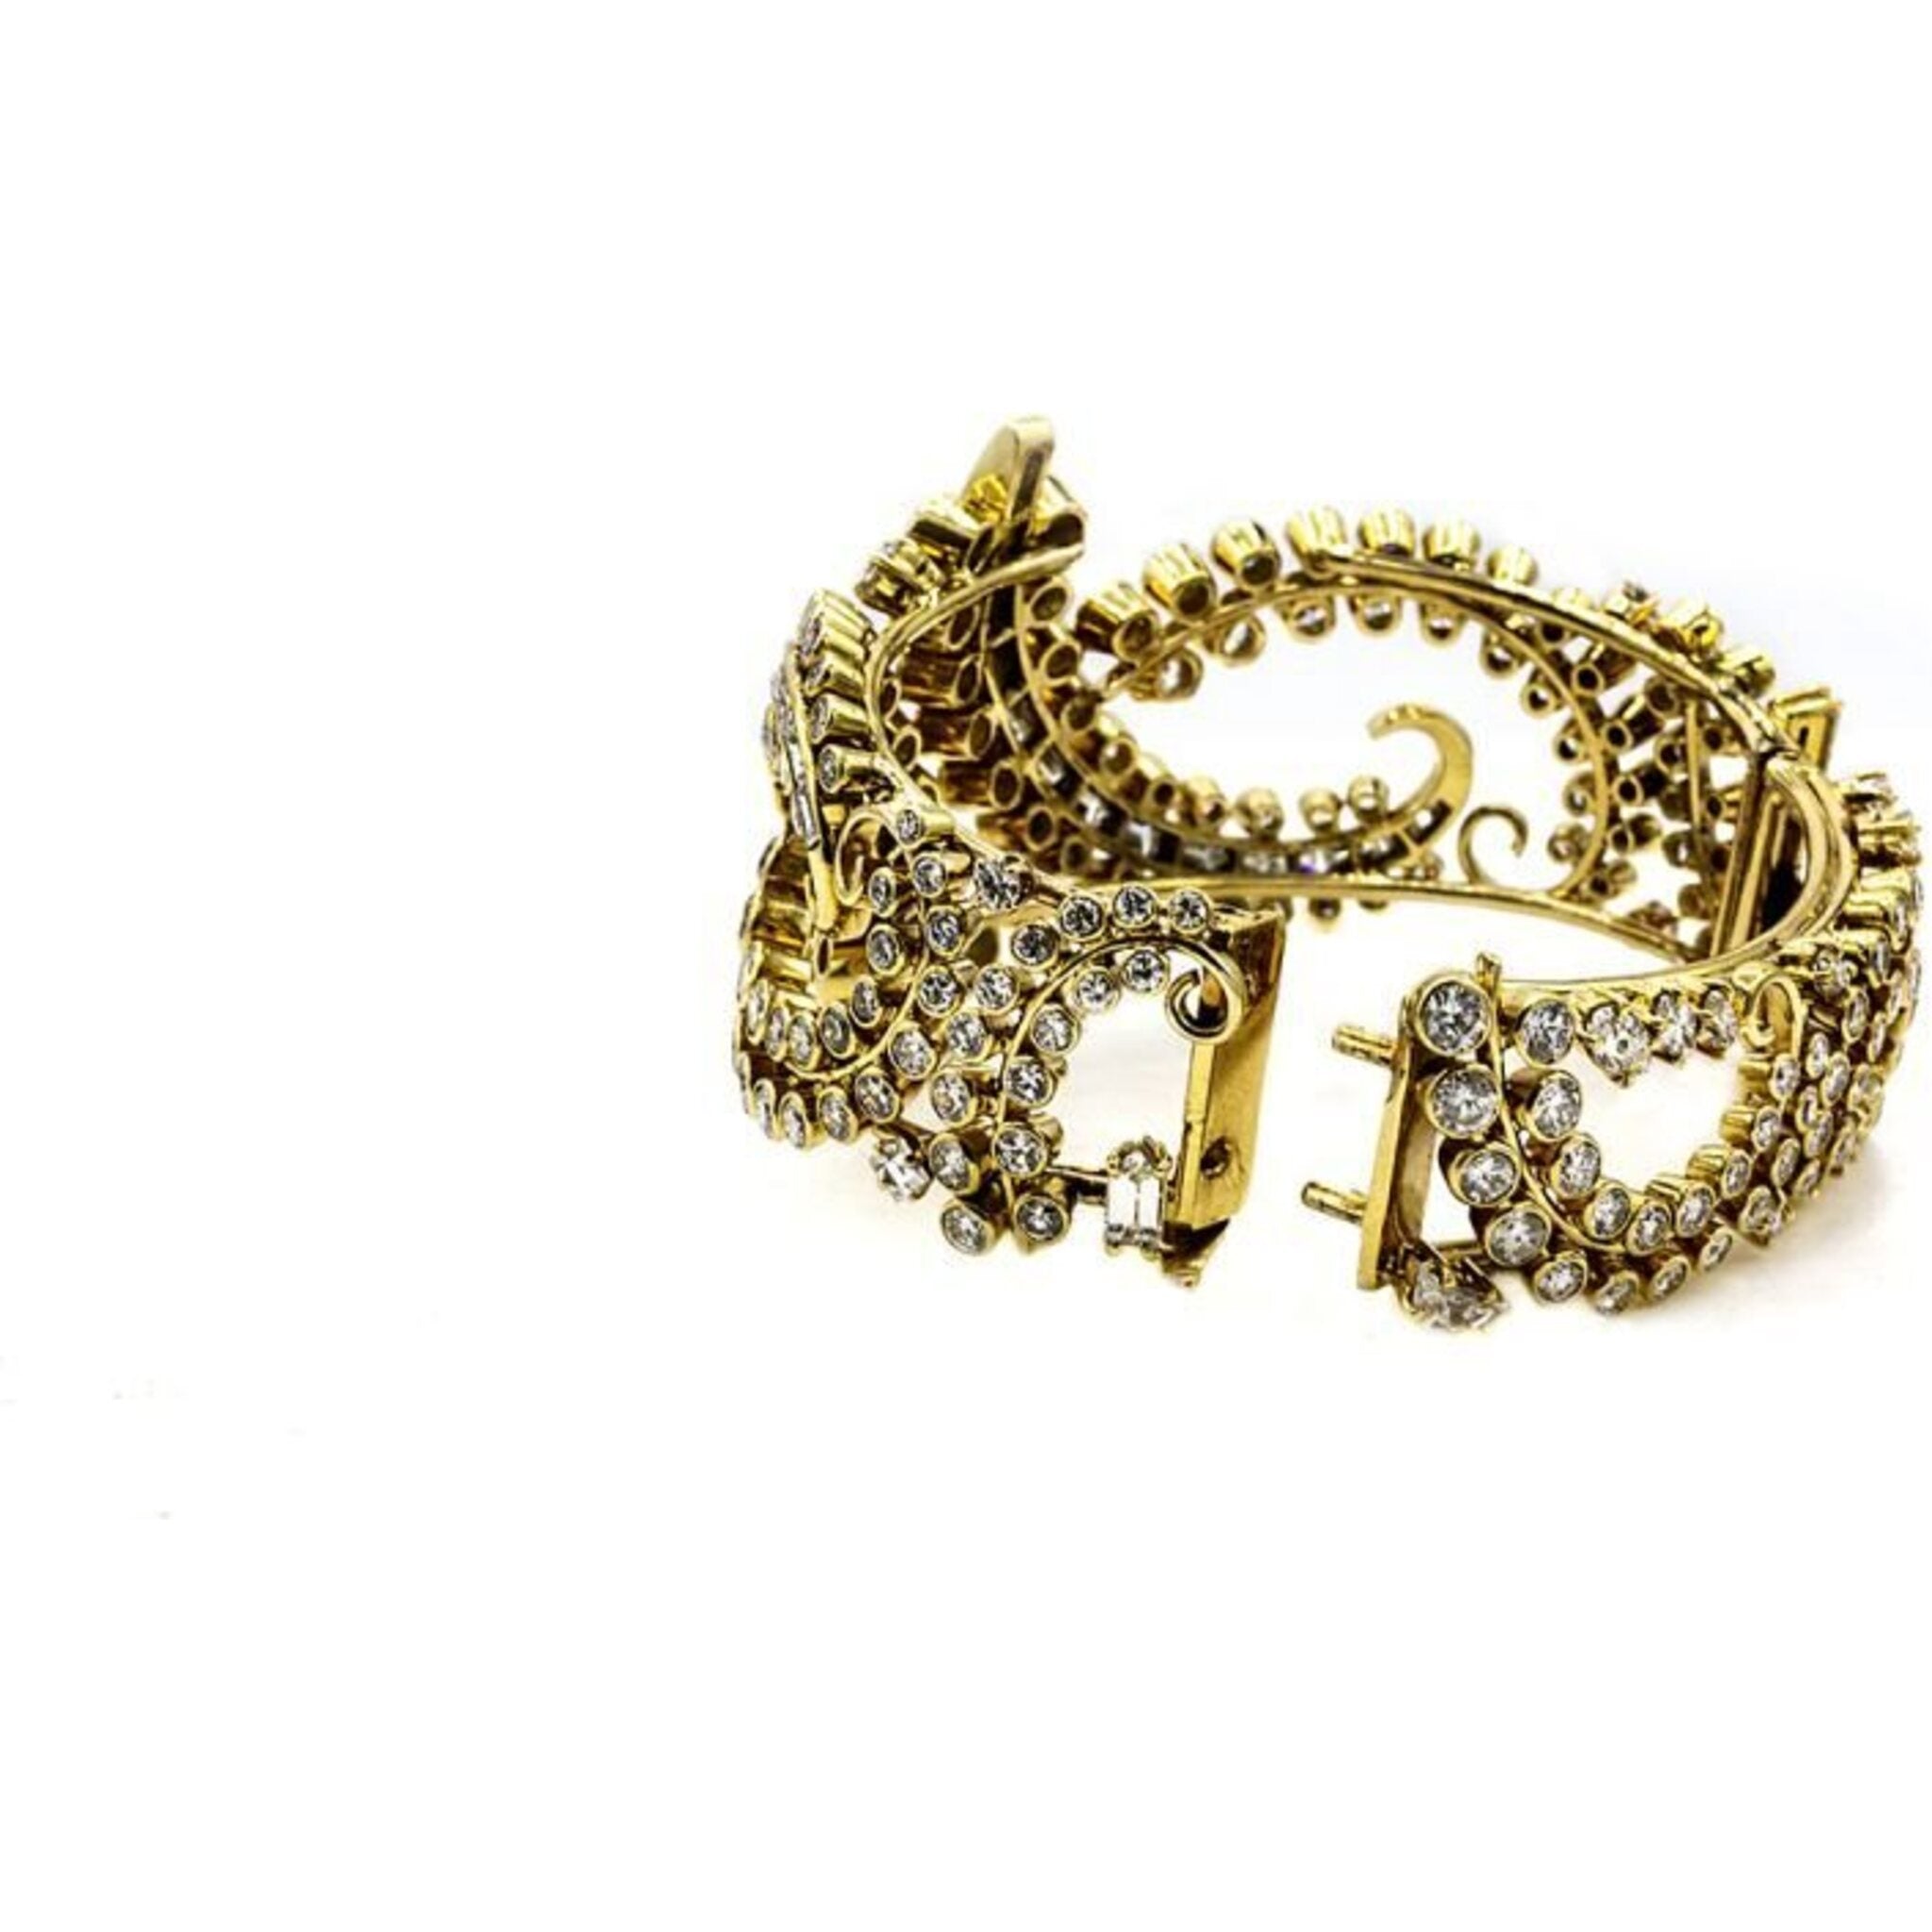 Circa 1980's 18K Yellow Gold 25 Carat Diamond Bracelet